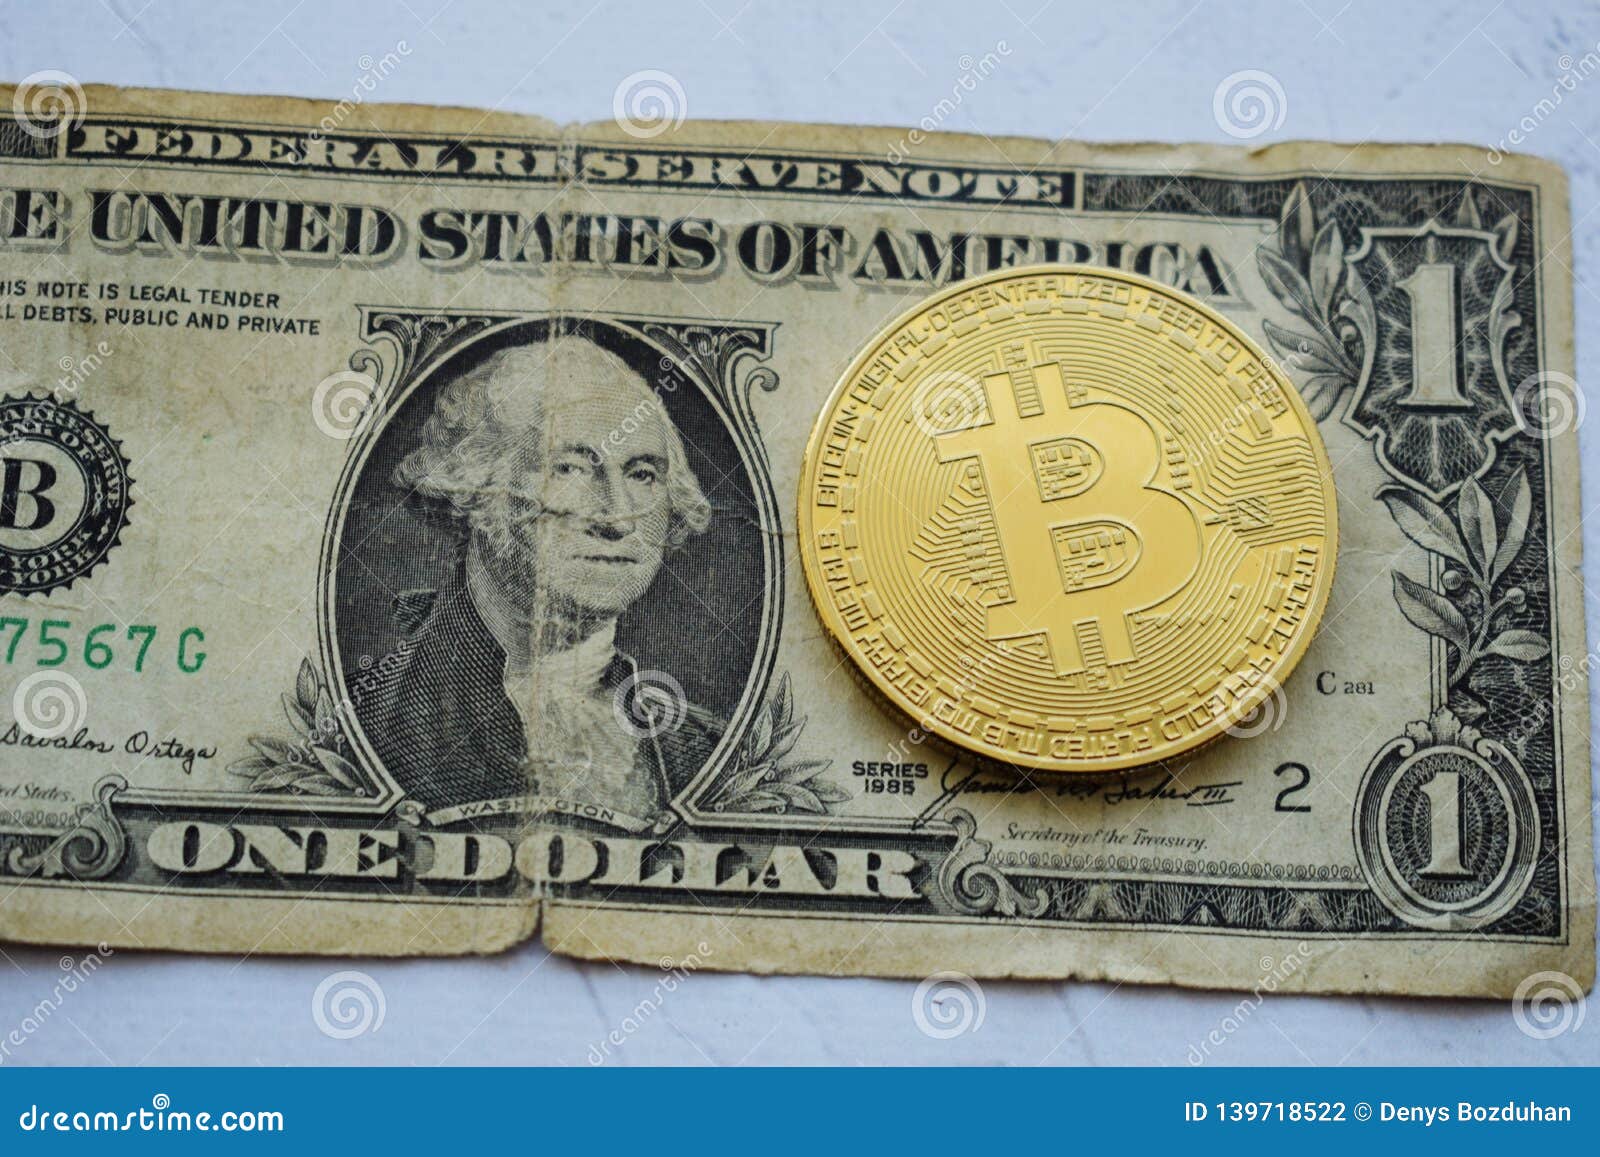 buy bitcoin one dollar